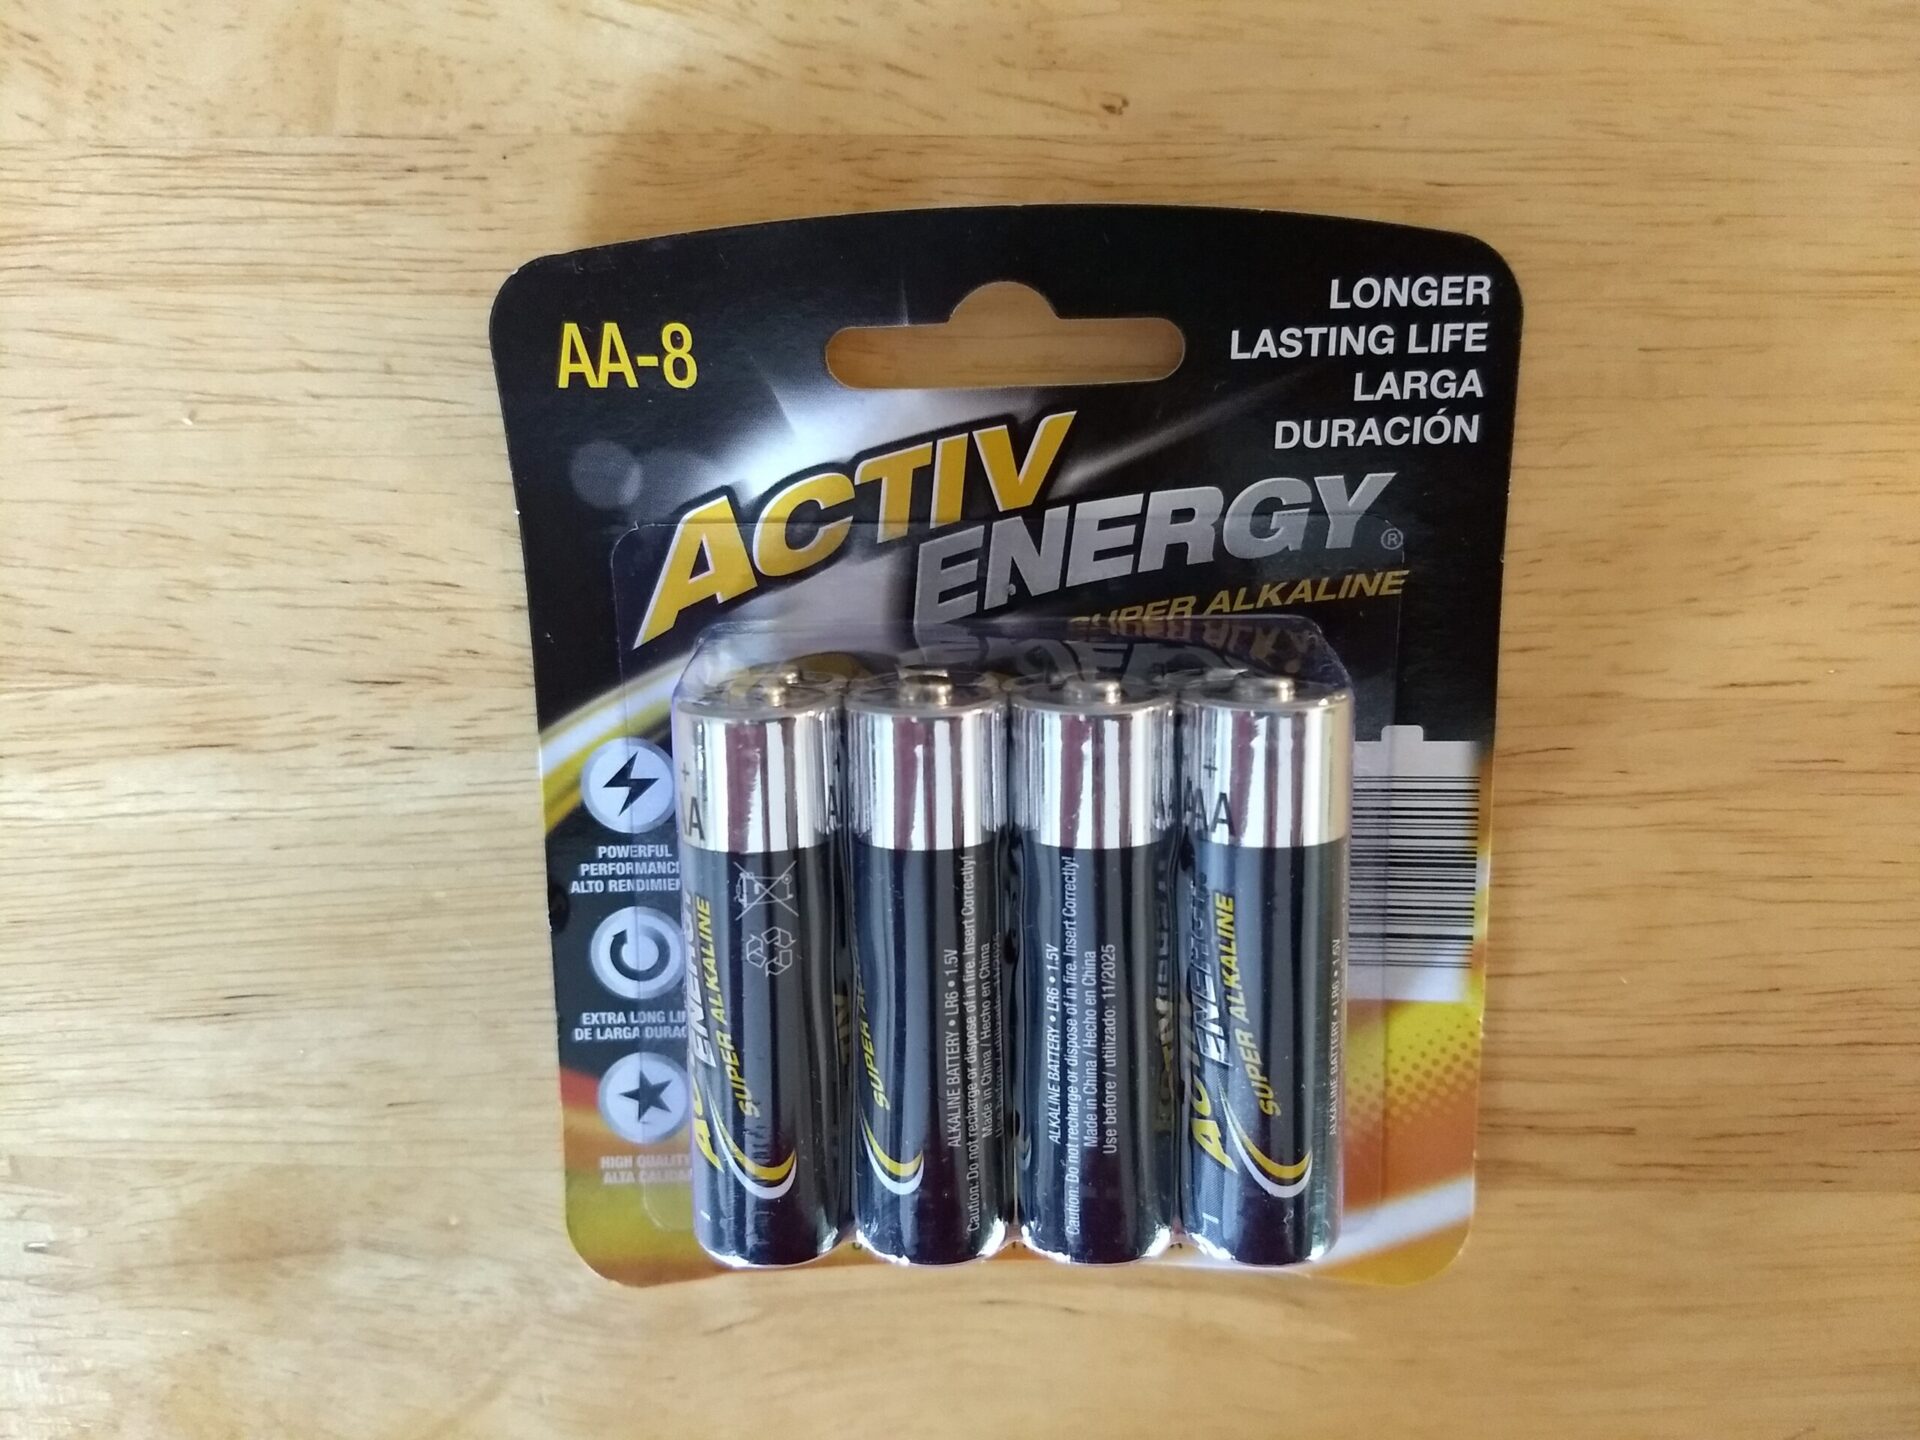 Activ Energy Alkaline Batteries | REVIEWER